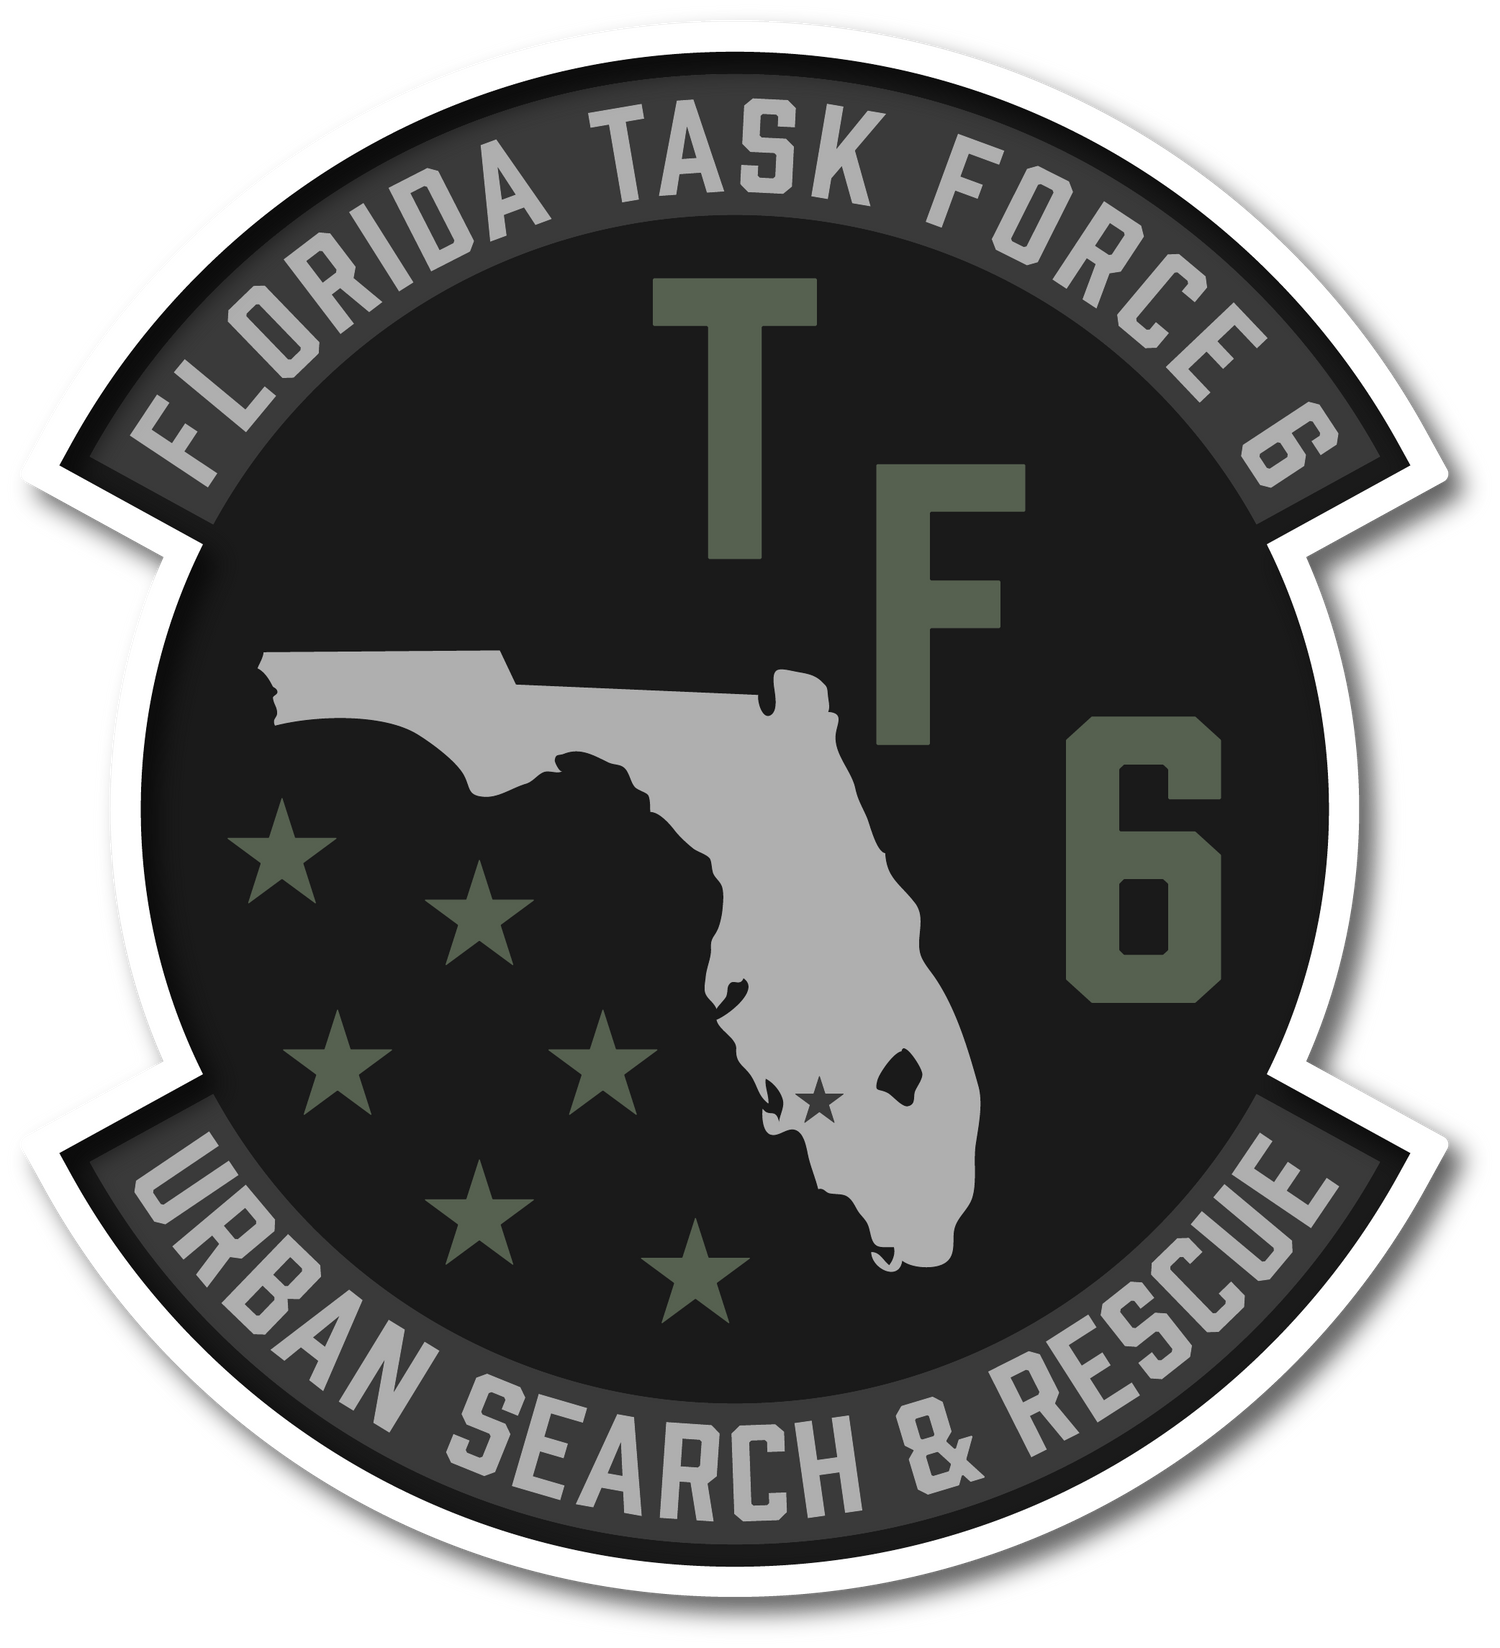 Florida Task Force 6 Helmet/Gear Decal